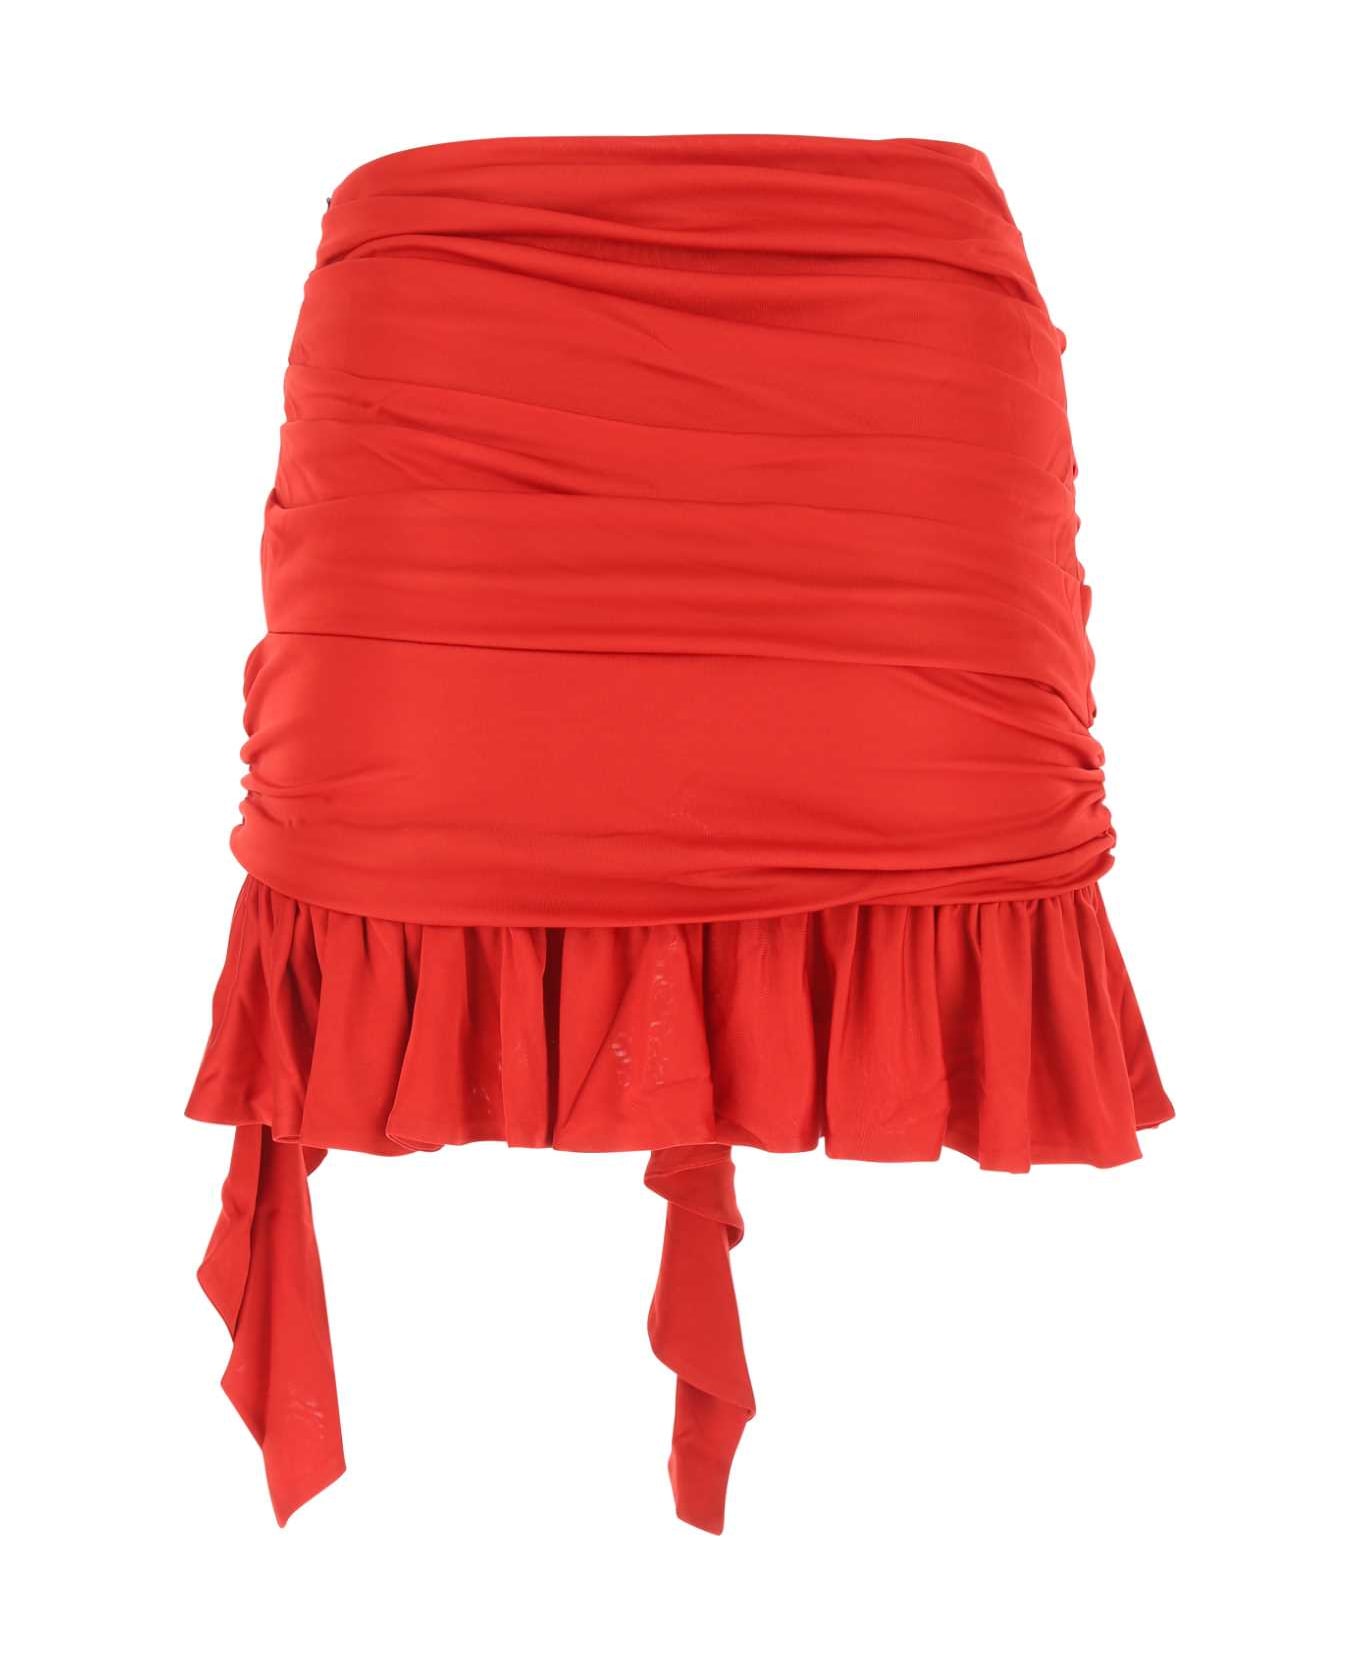 ANDREĀDAMO Red Viscose Mini Skirt - 1107